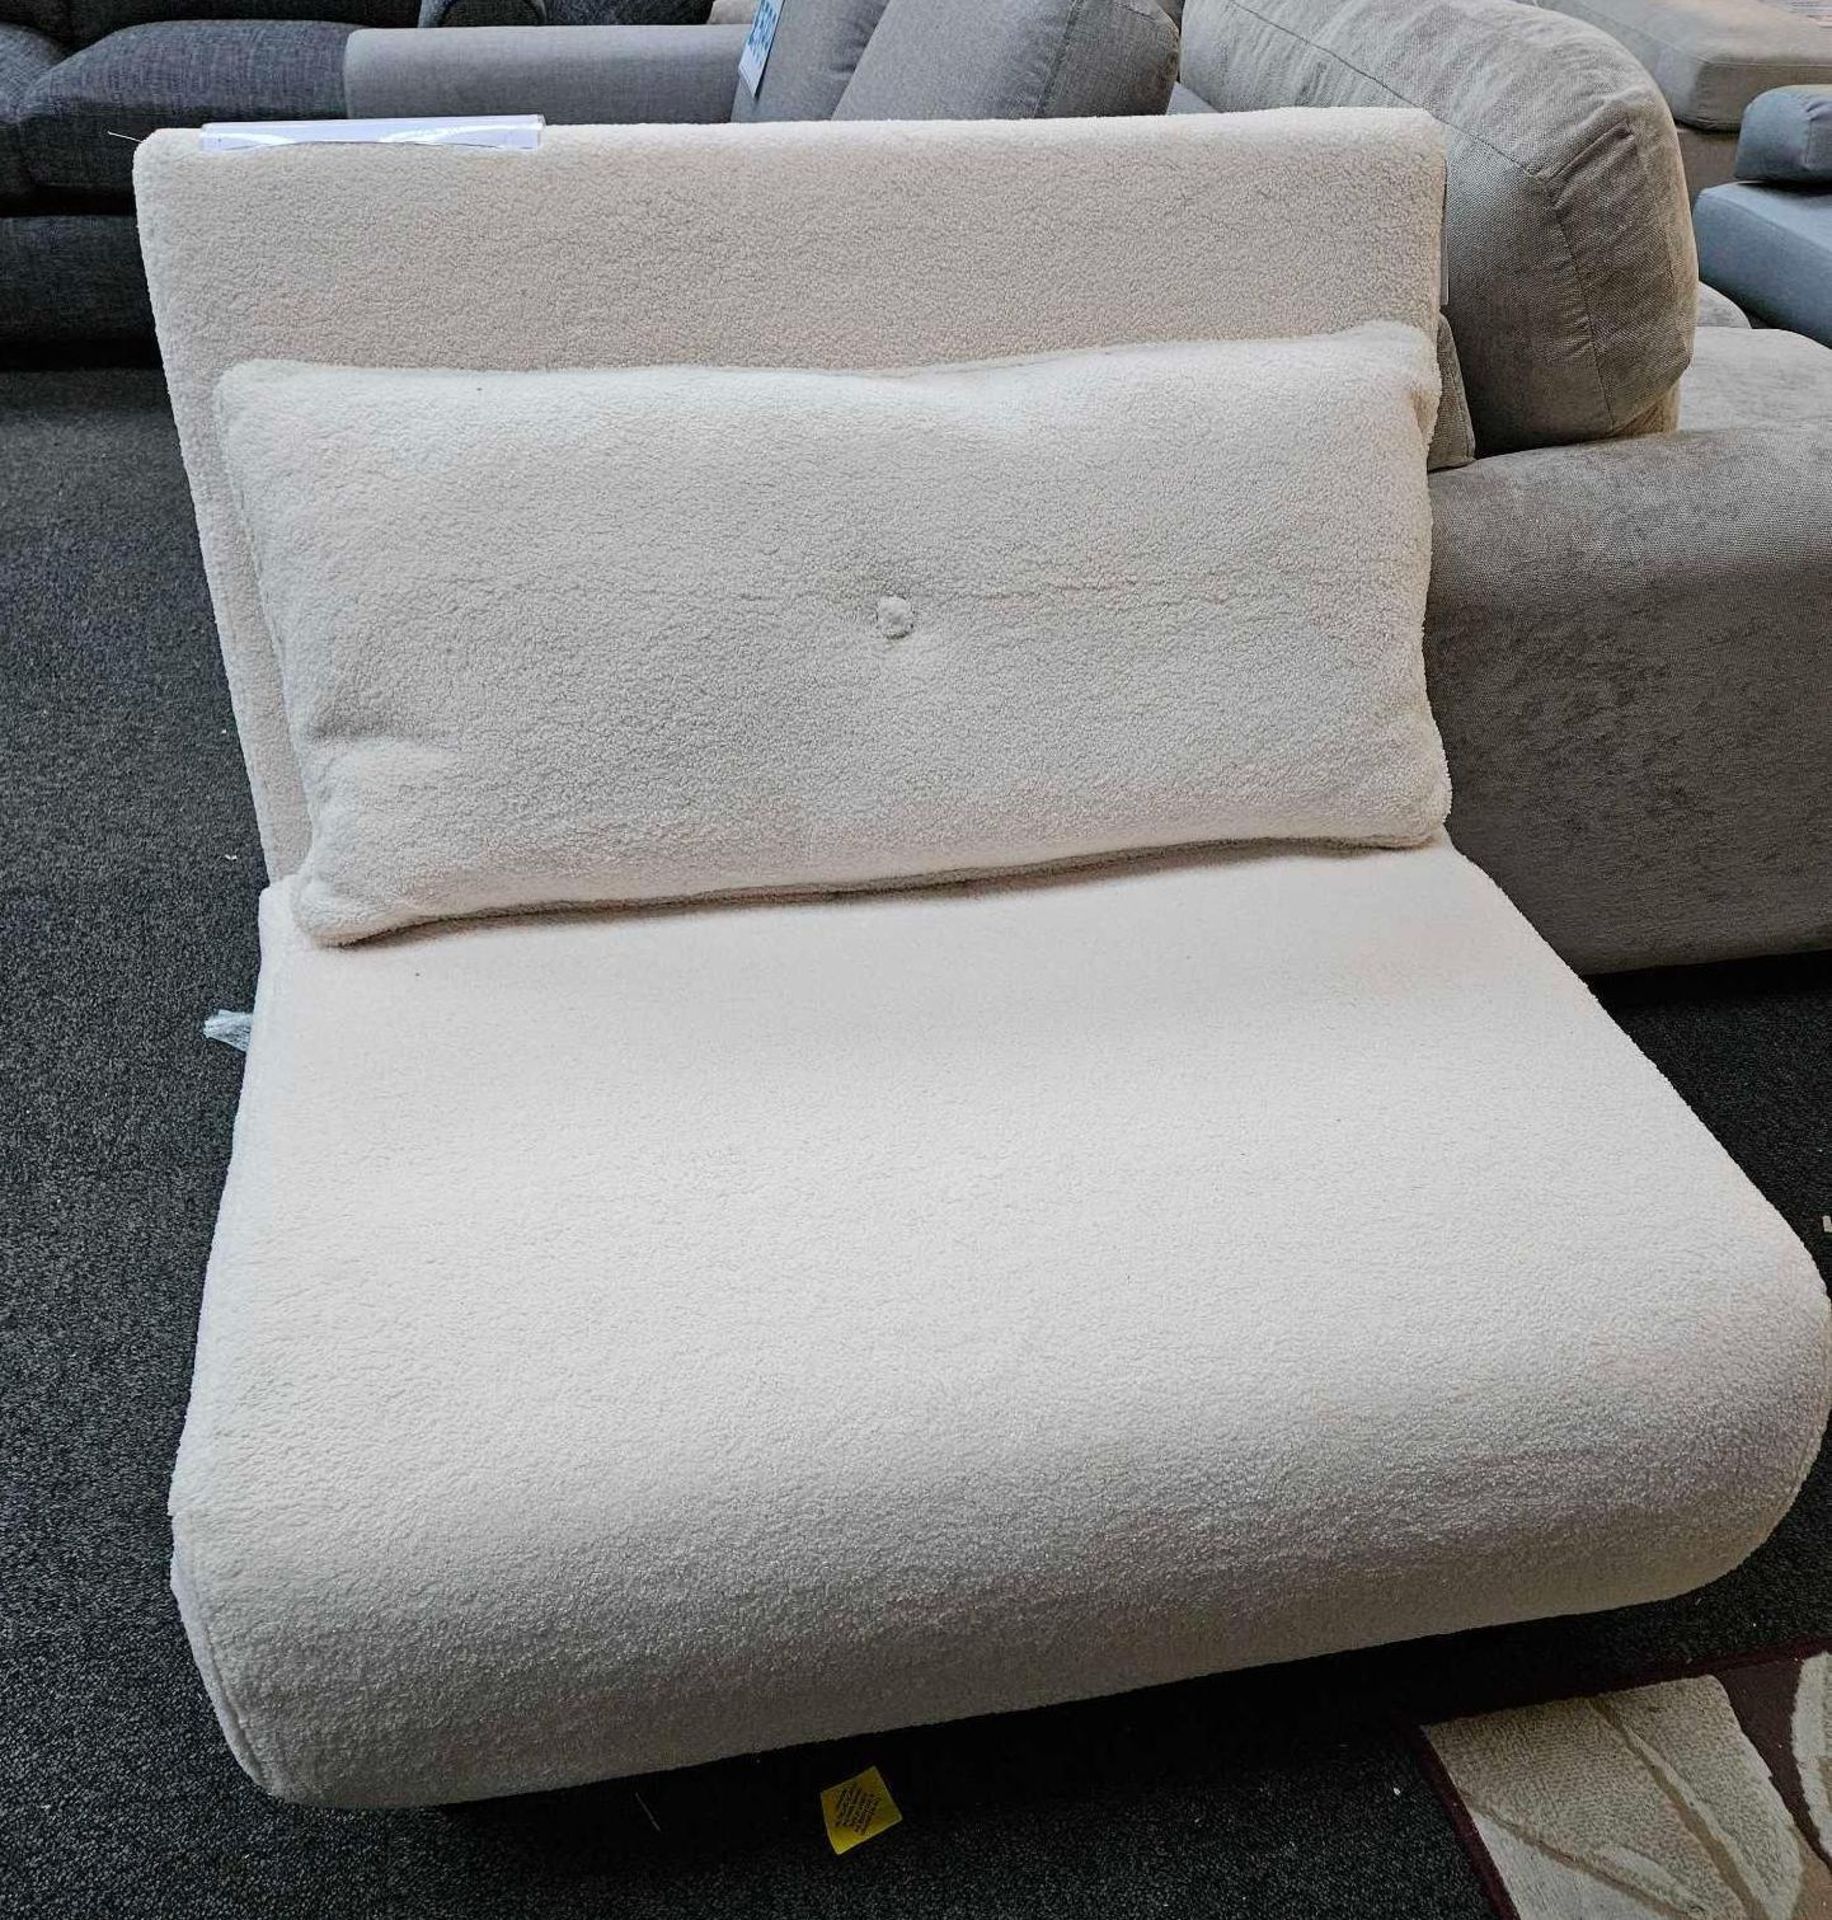 *EX DISPLAY* Habitat Roma lambs wool designer chair bed in cream.